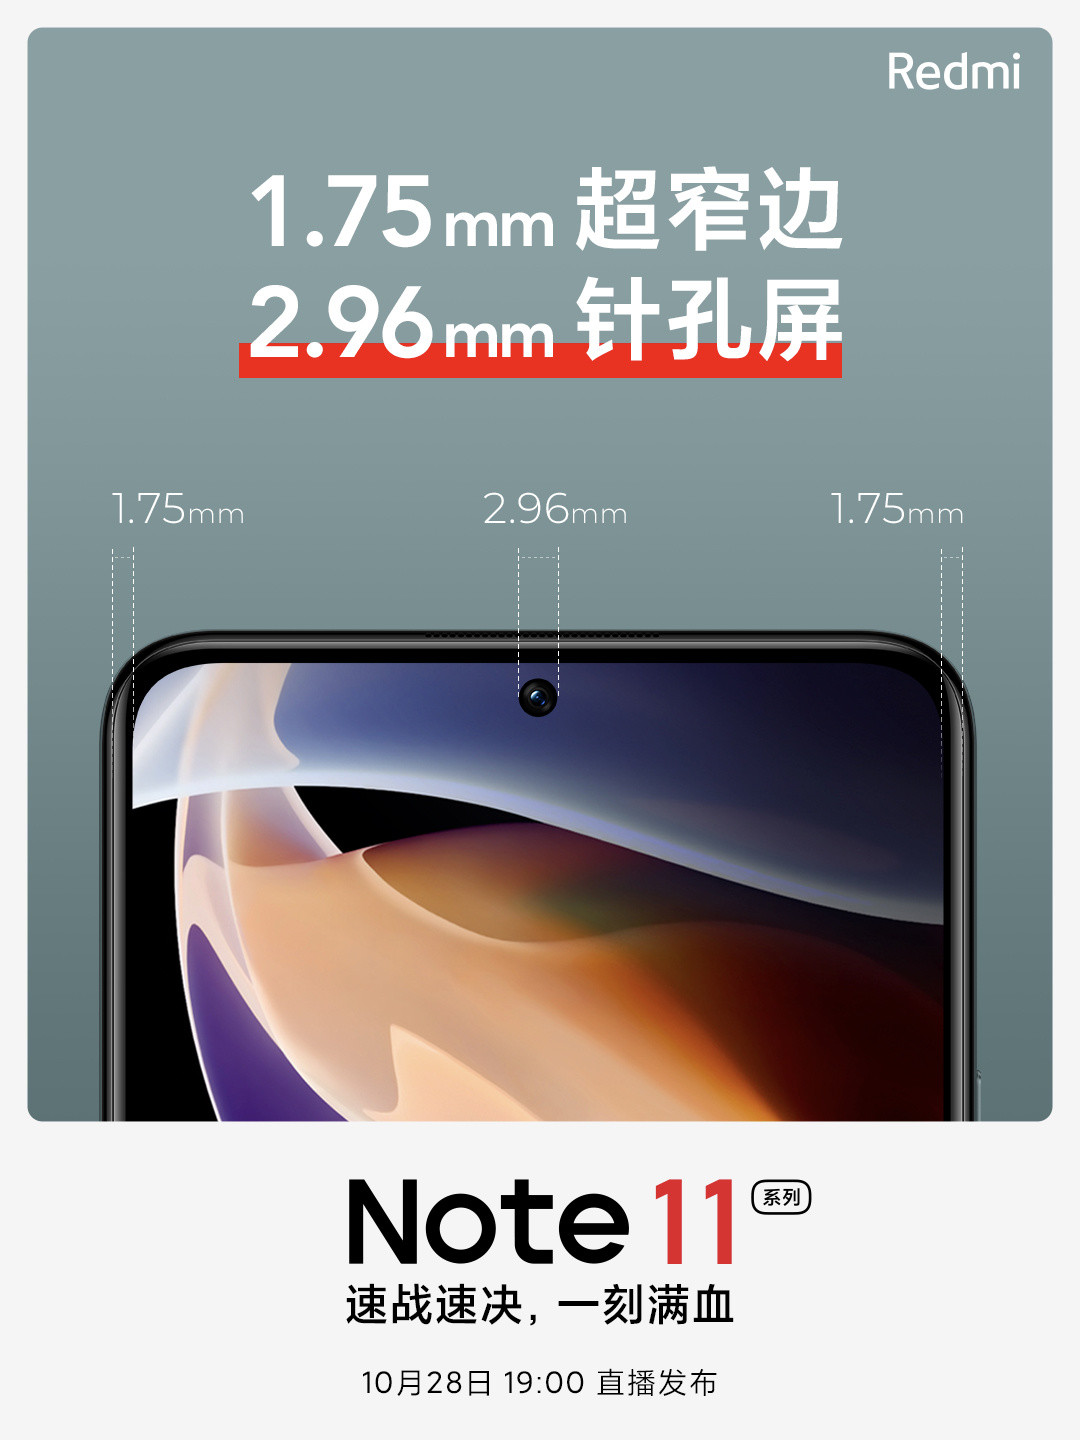  Redmi Note 11 系列屏幕揭晓：搭载 AMOLED 屏，支持高刷、高触控、高色域